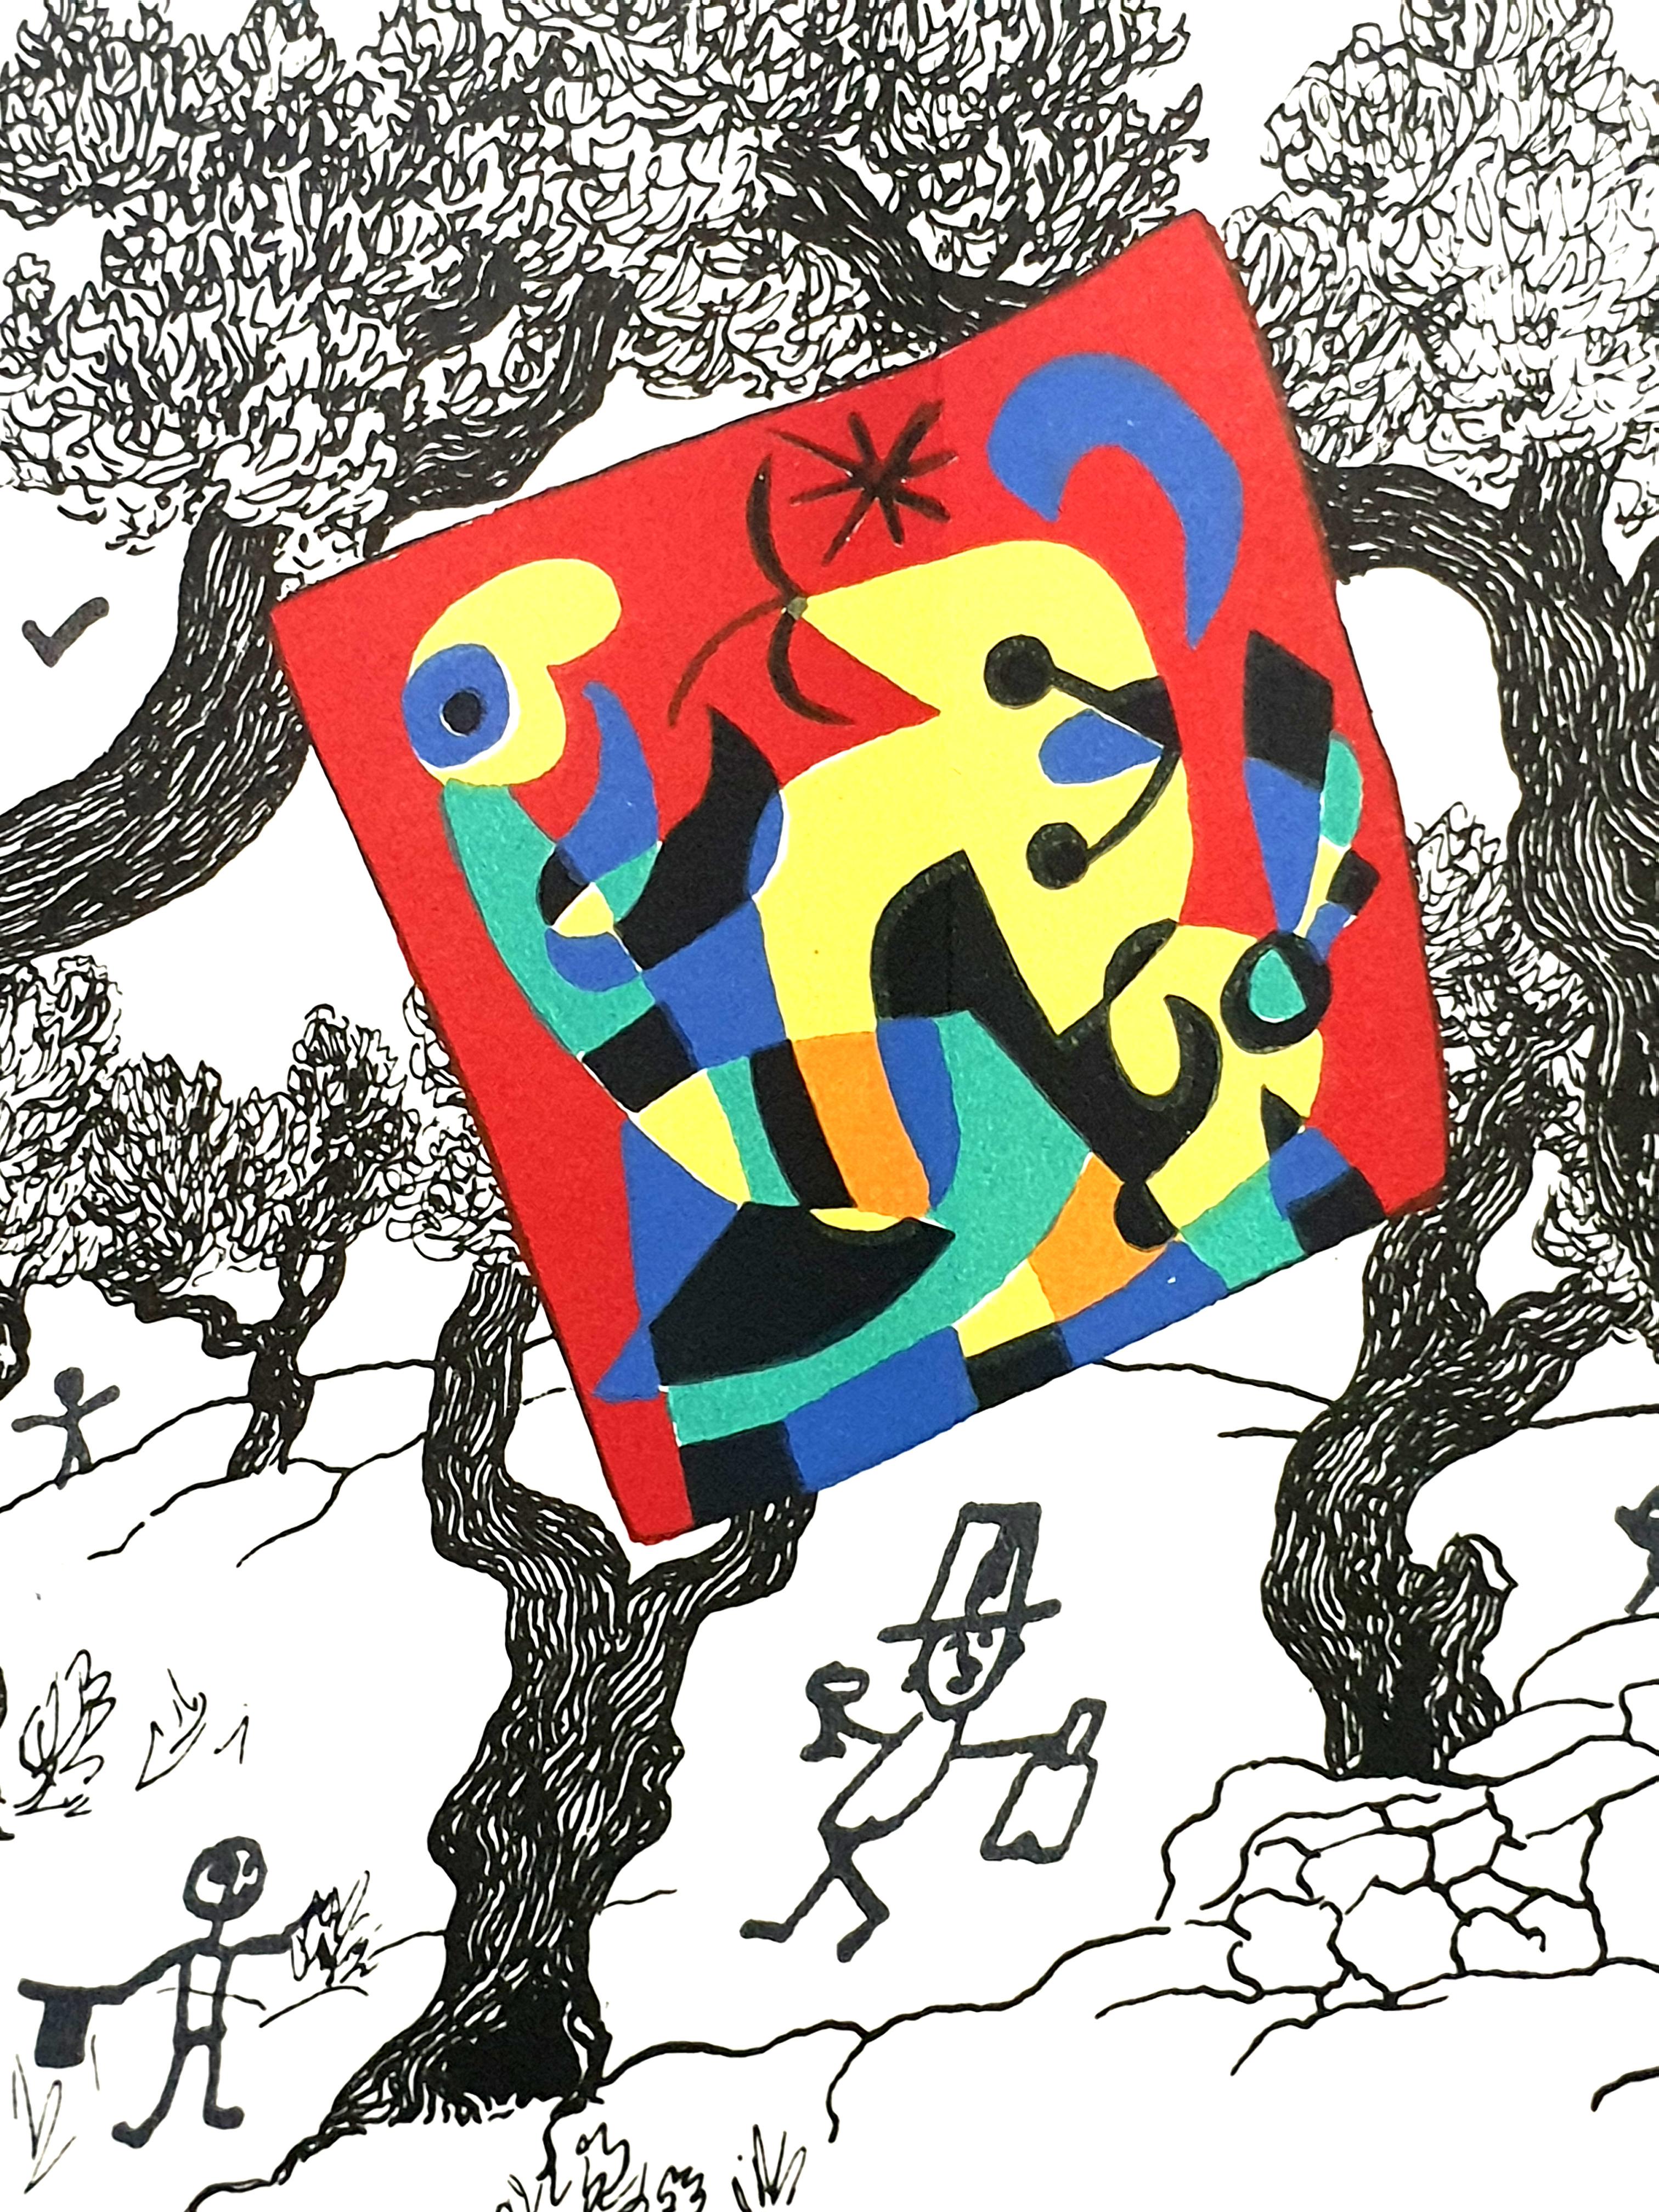 Joan Miro - The Party - Original Lithograph - Abstract Print by Joan Miró